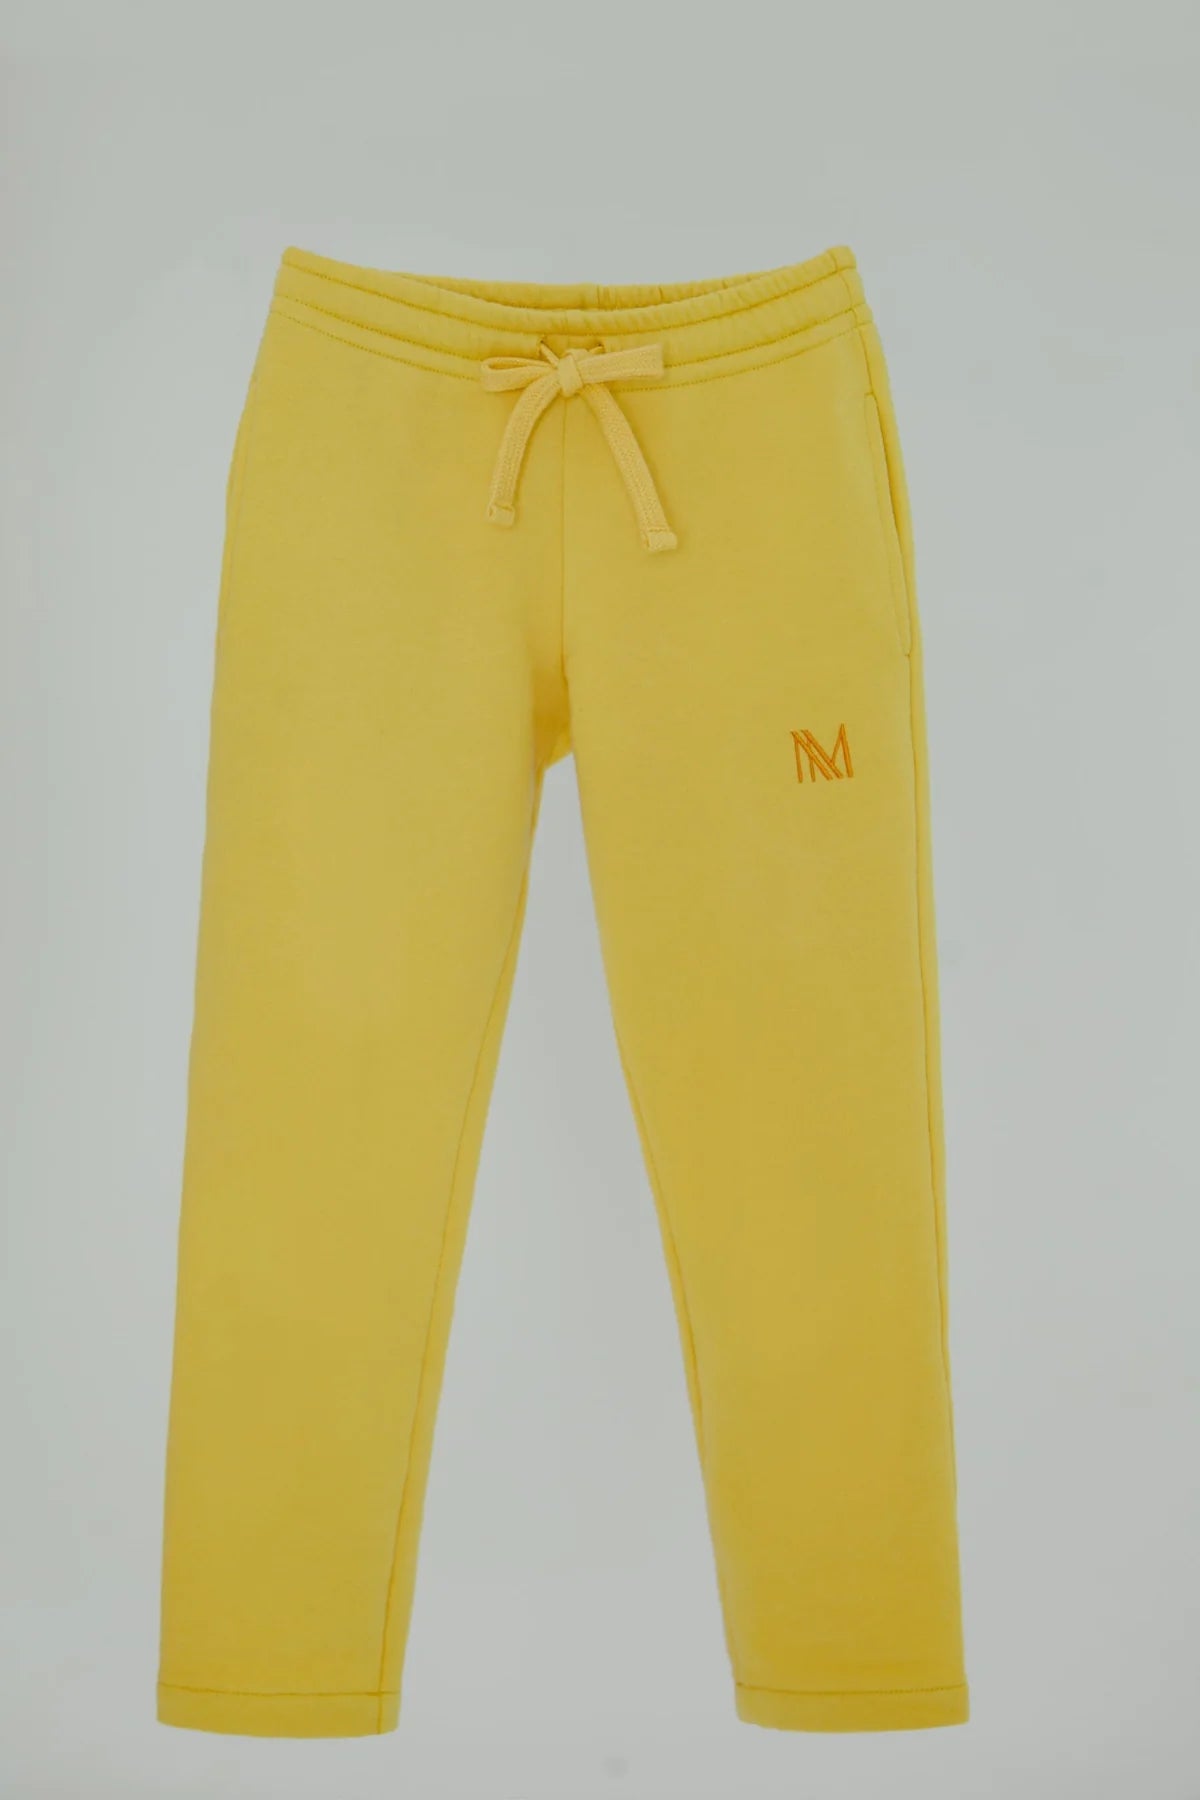 Sweatpants yellow /Pantalón deportivo amarillo